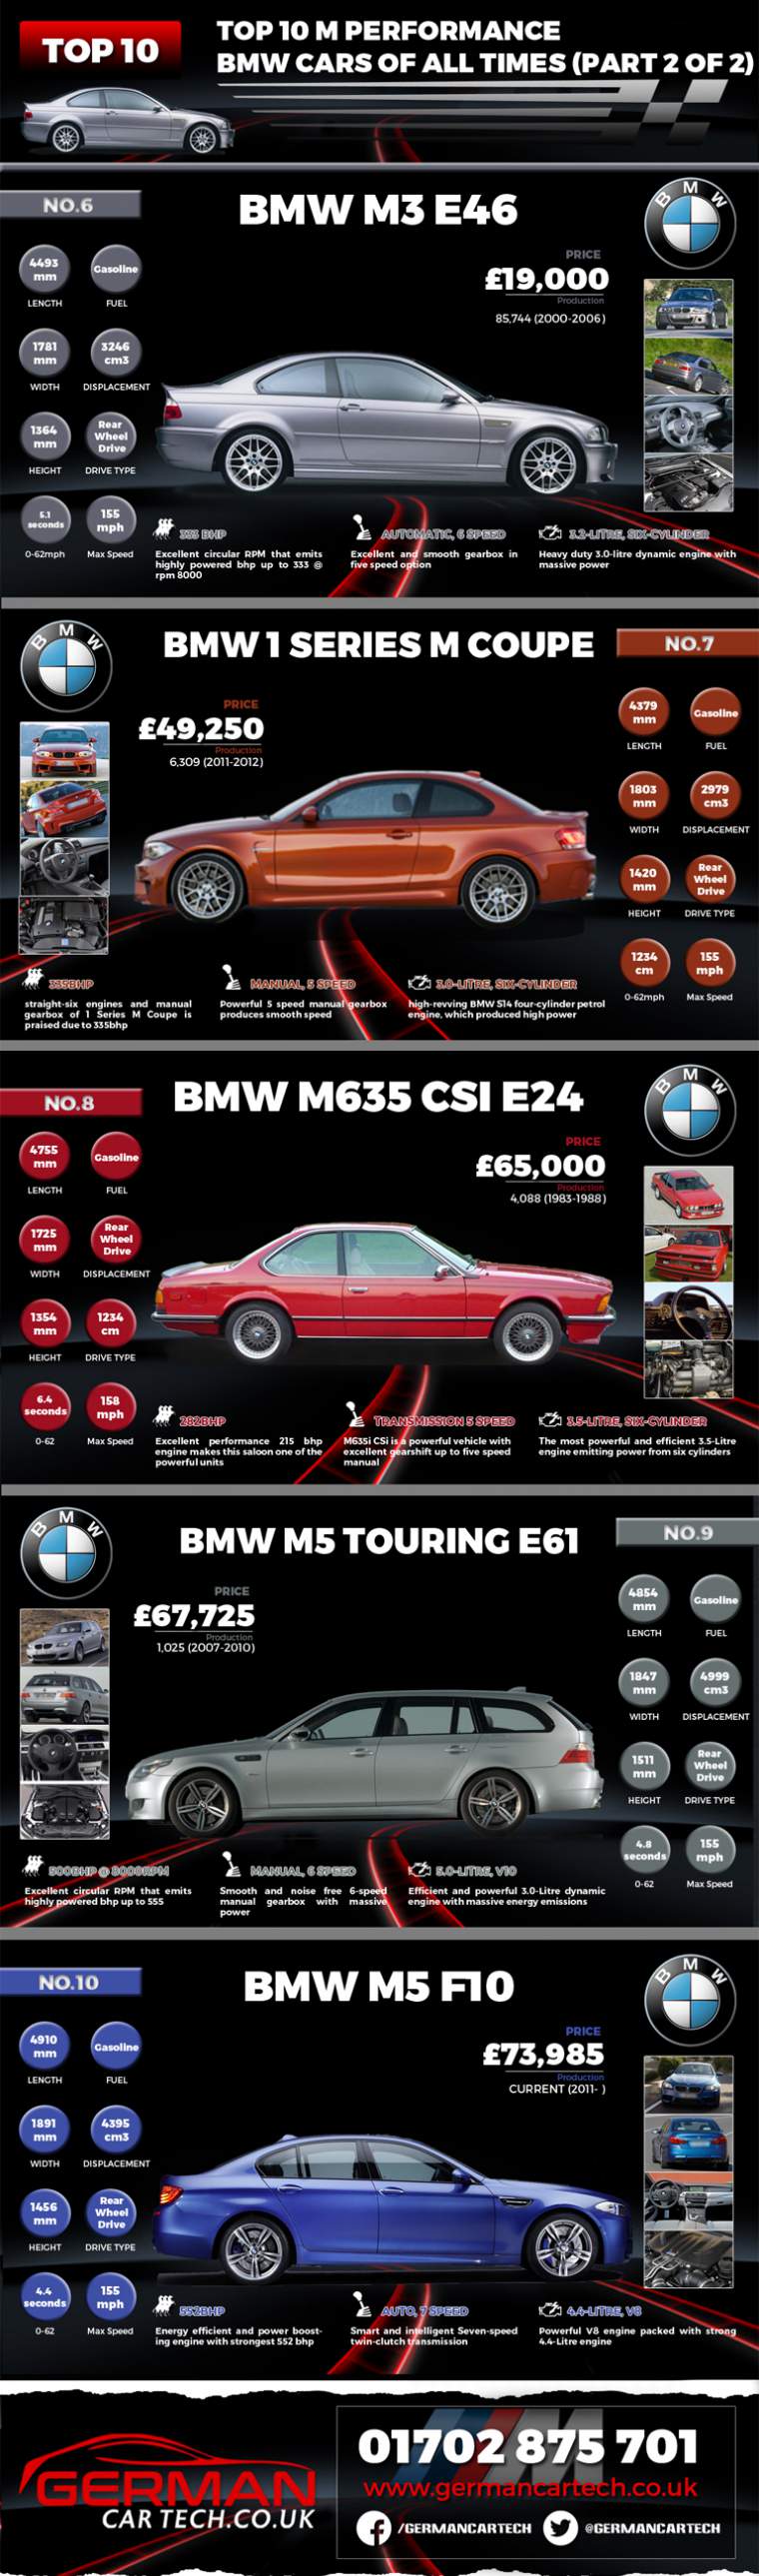 Top 10 M Performance BMW Cars